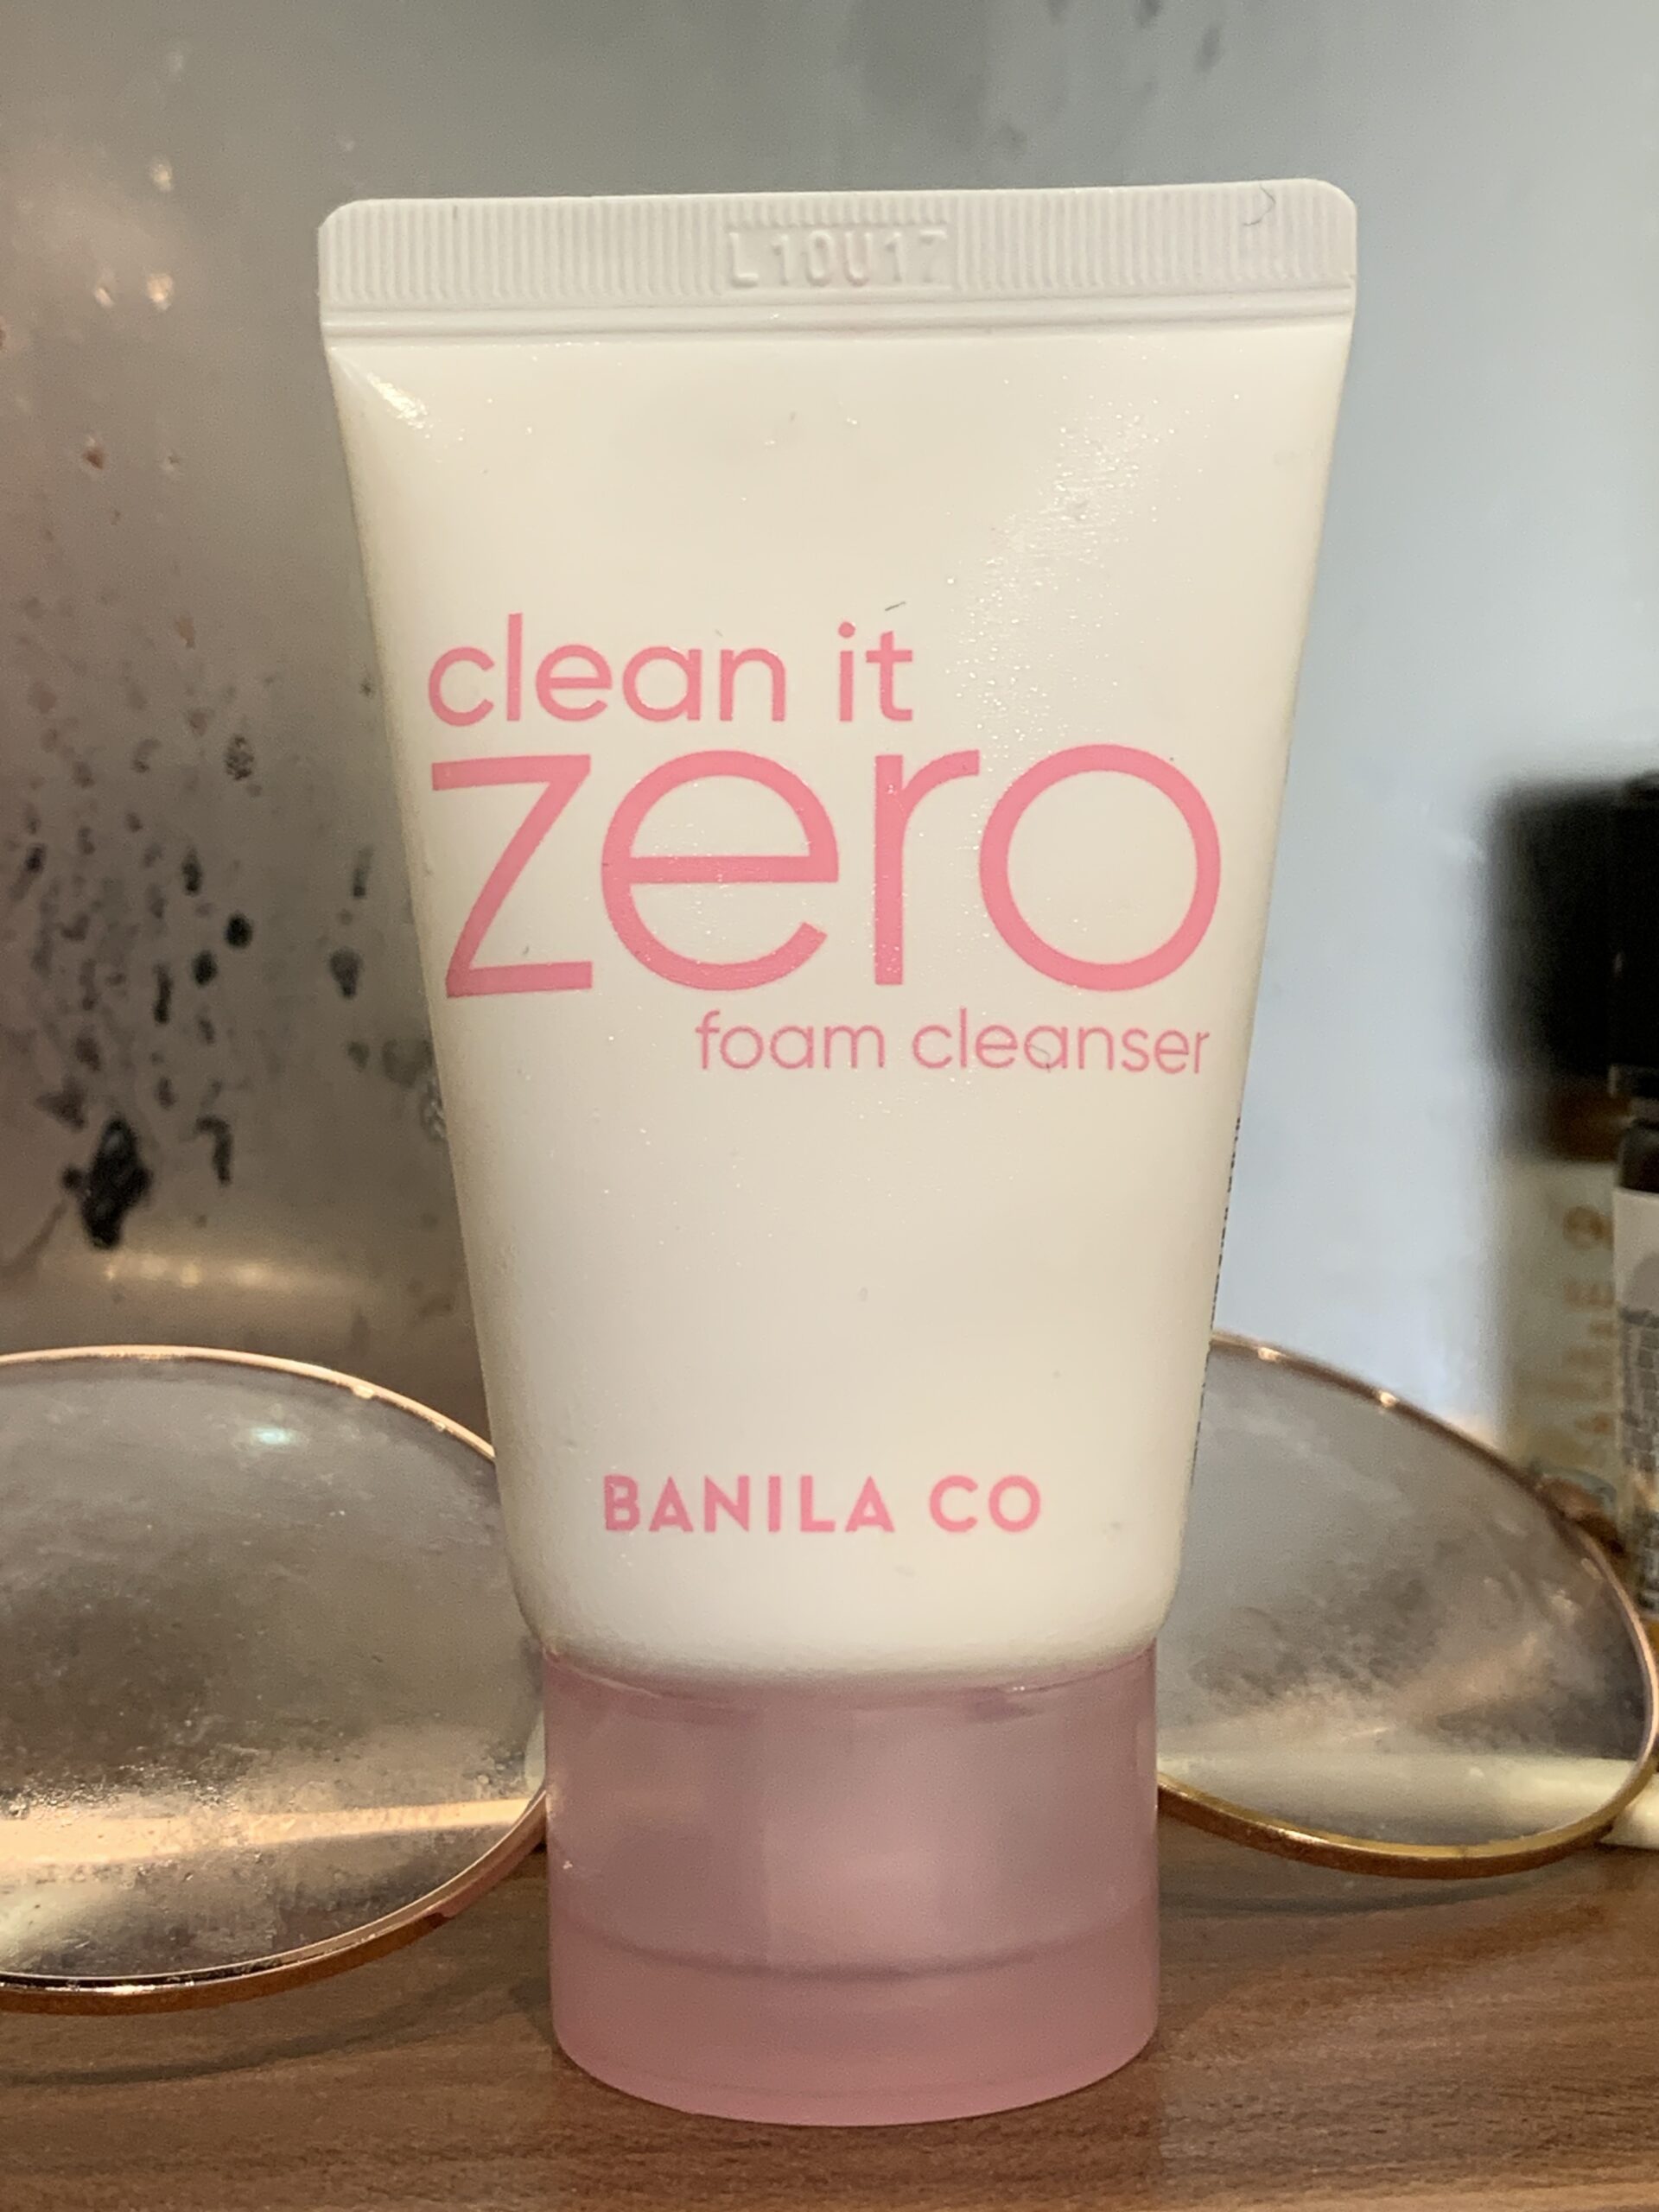 Banila co clean it zero foam cleanser